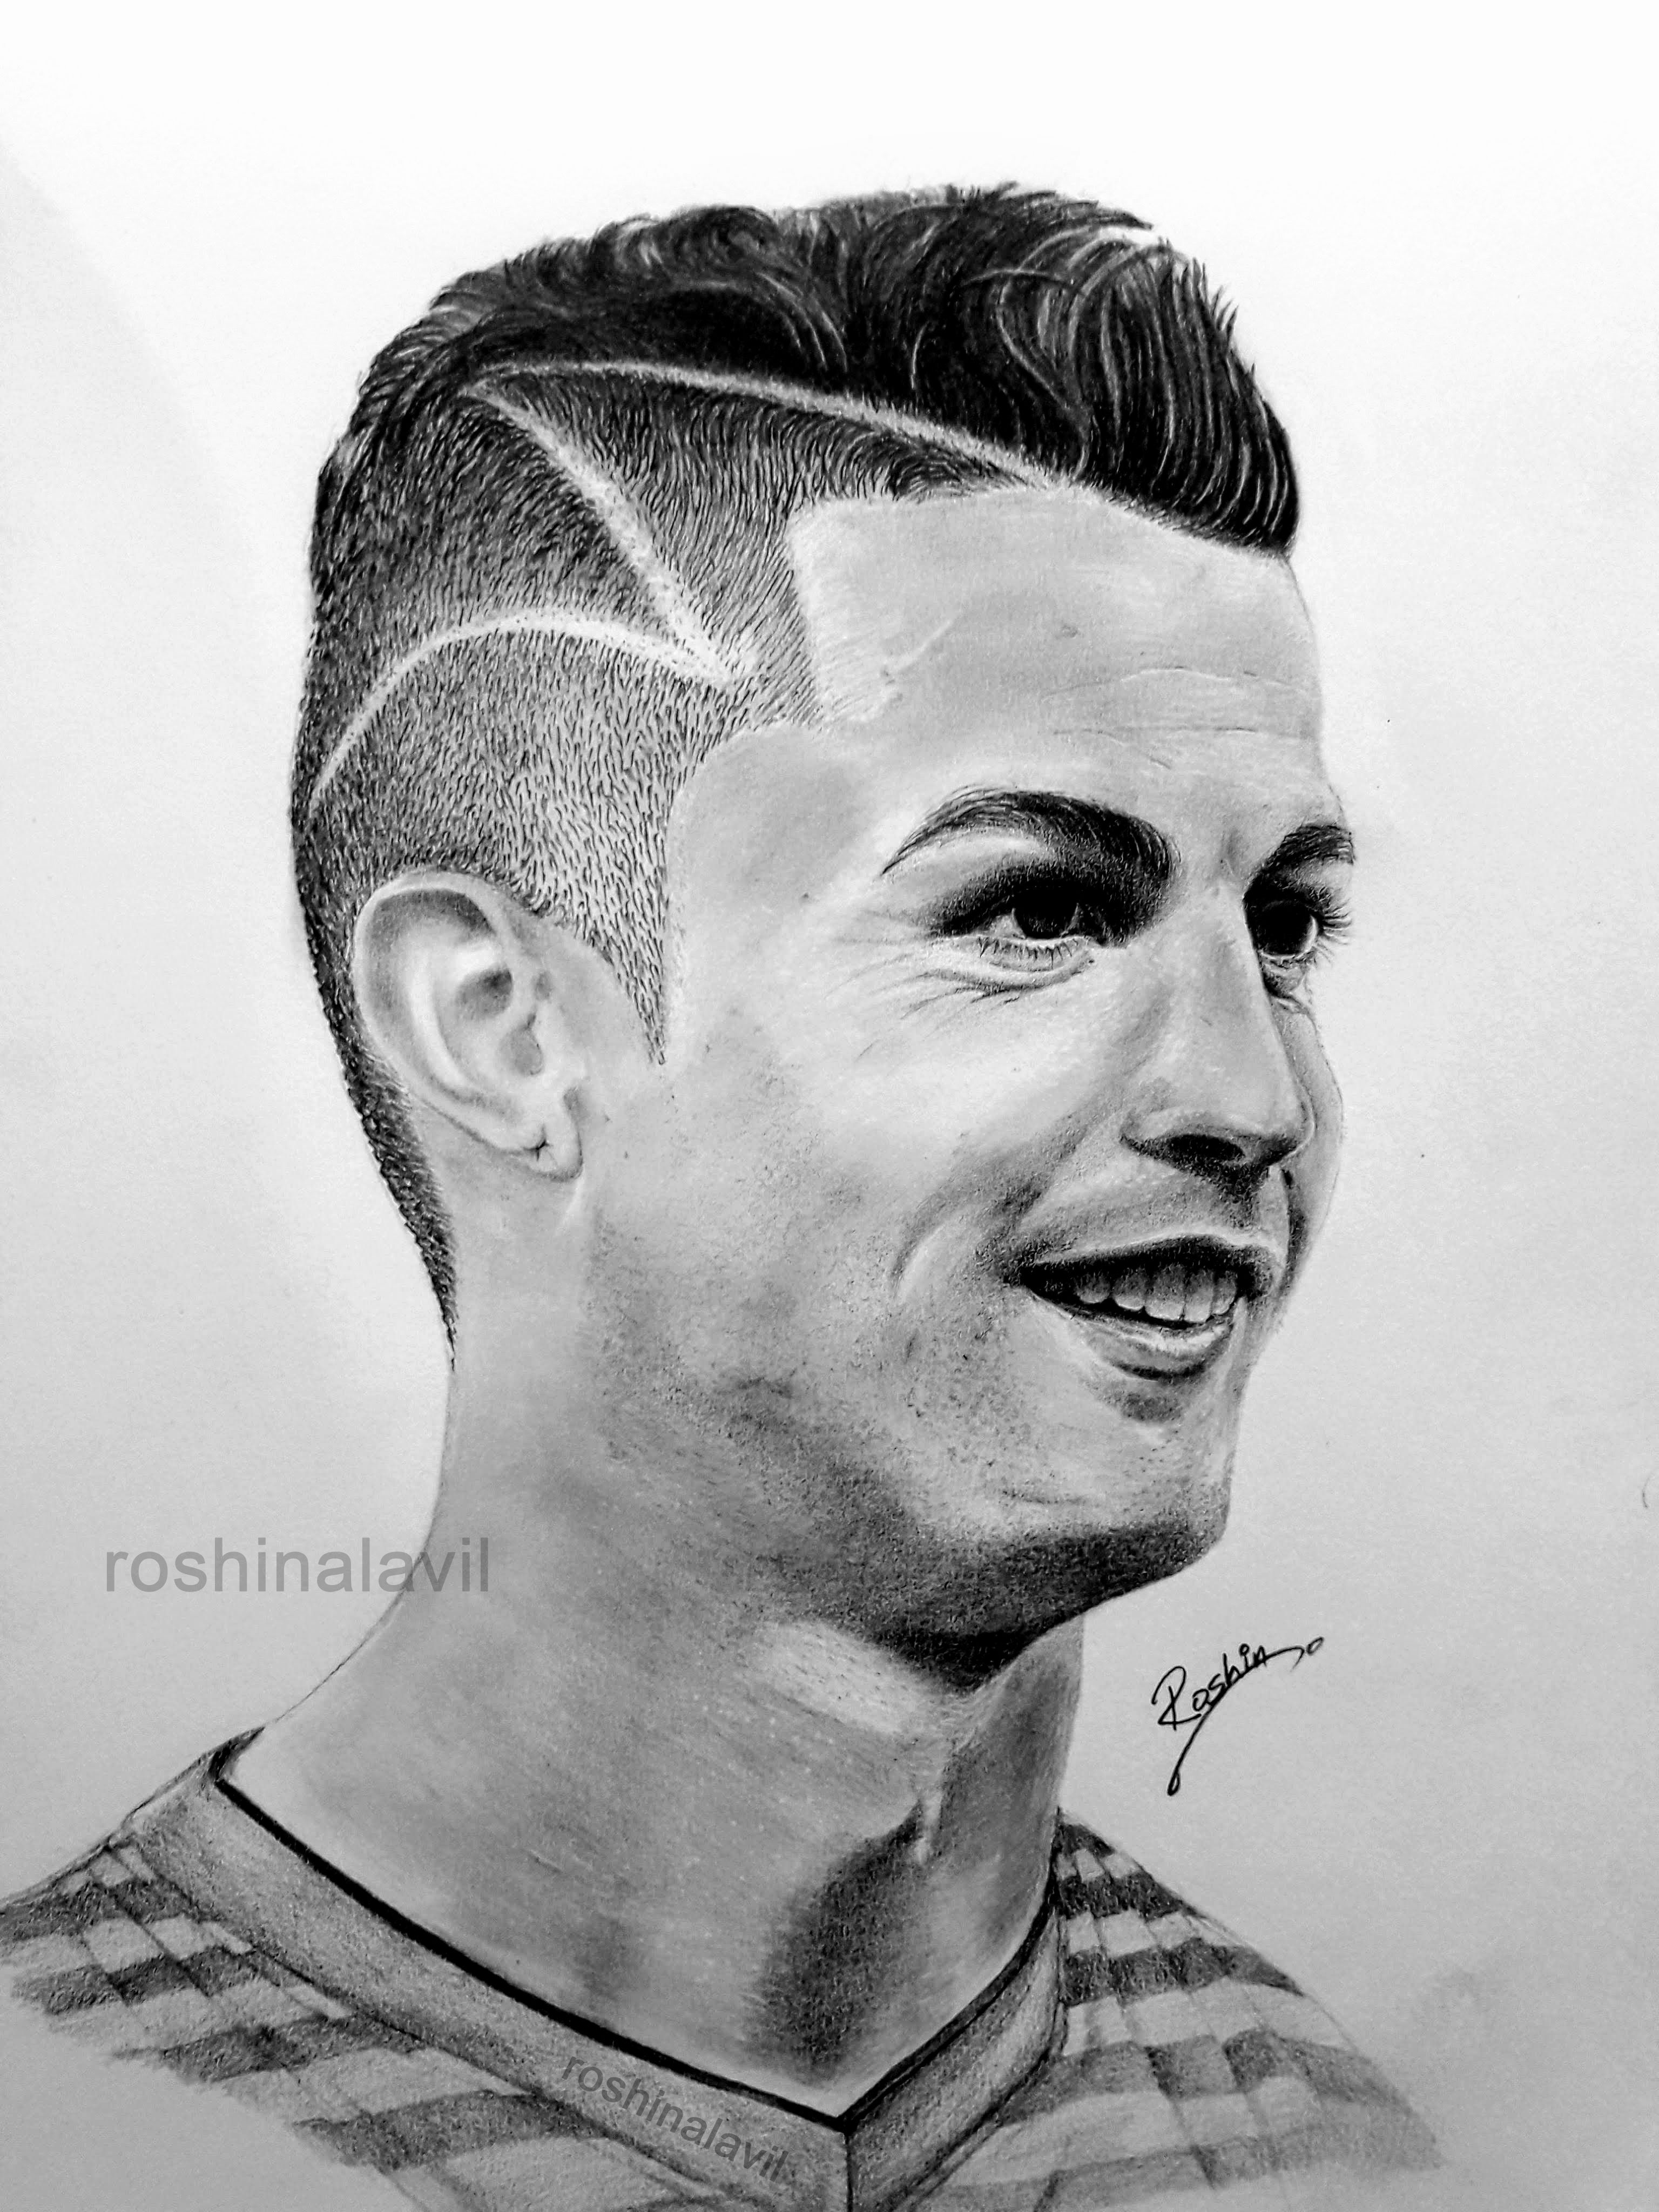 How To Draw The Ronaldo